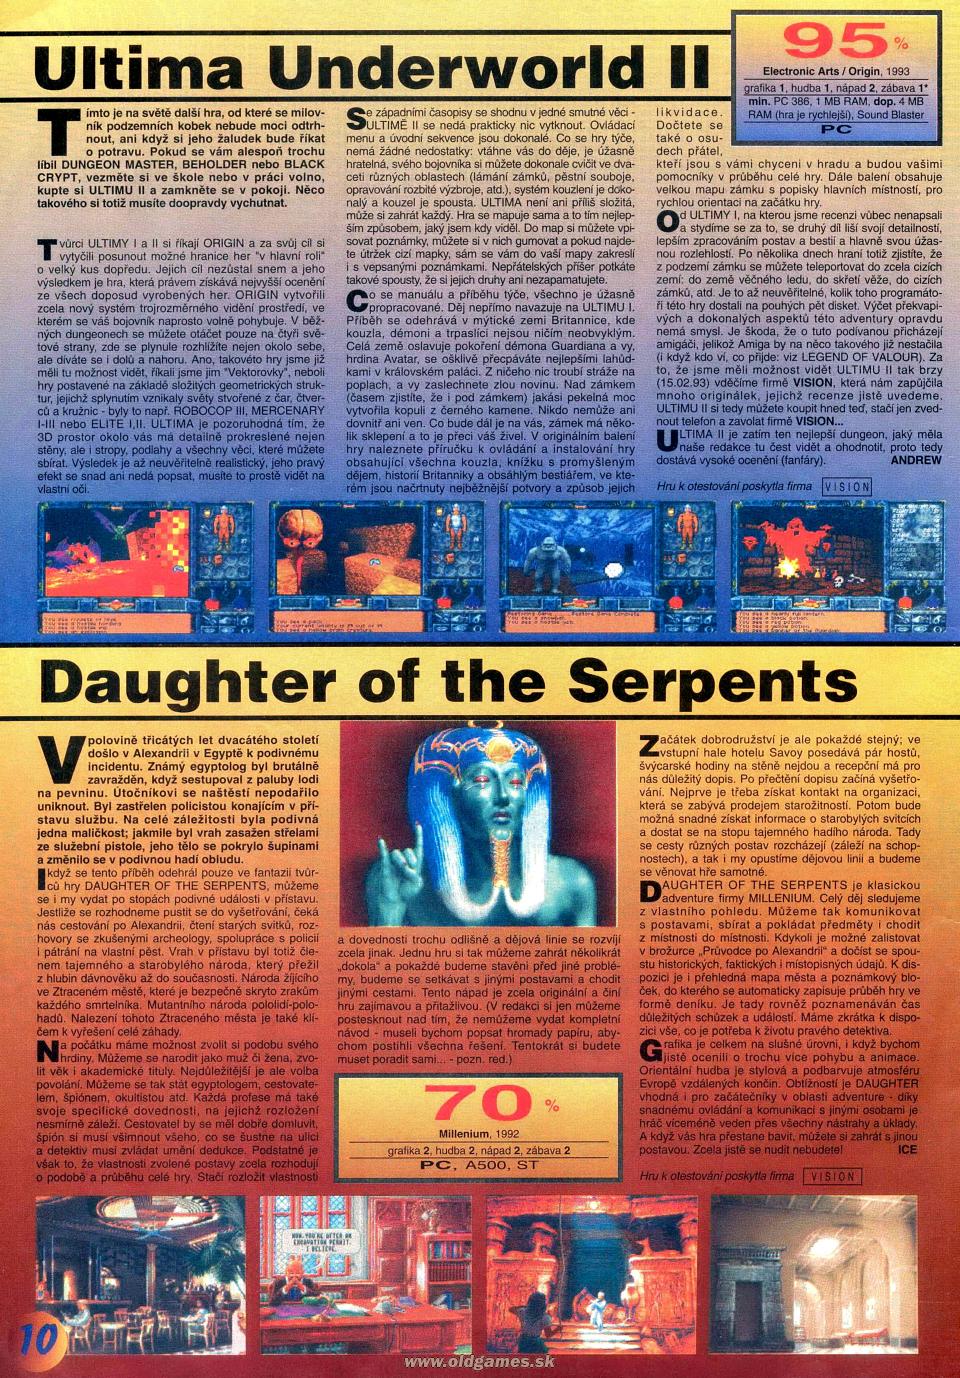 Ultima Underworld 2, Daughter of Serpents